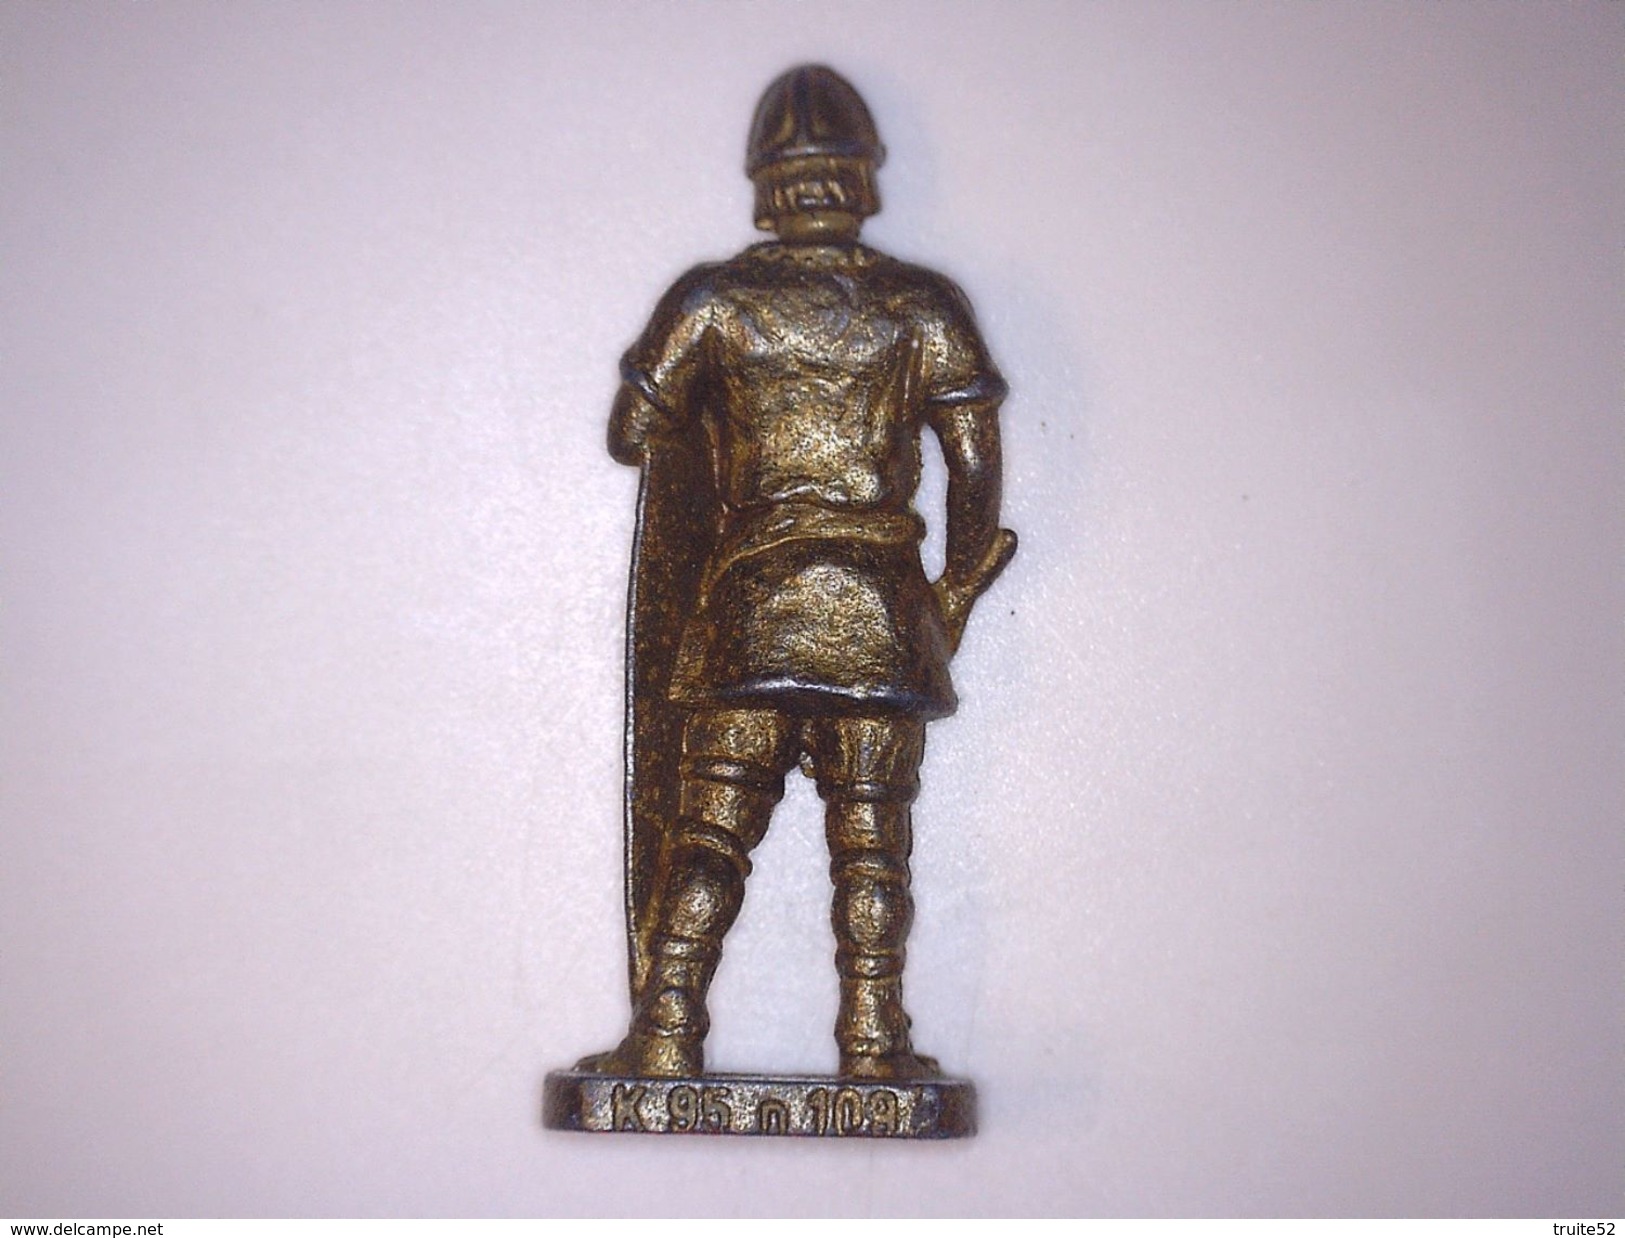 FIGURINE KINDER METAL SOLDAT HUN 3 - Metal Figurines